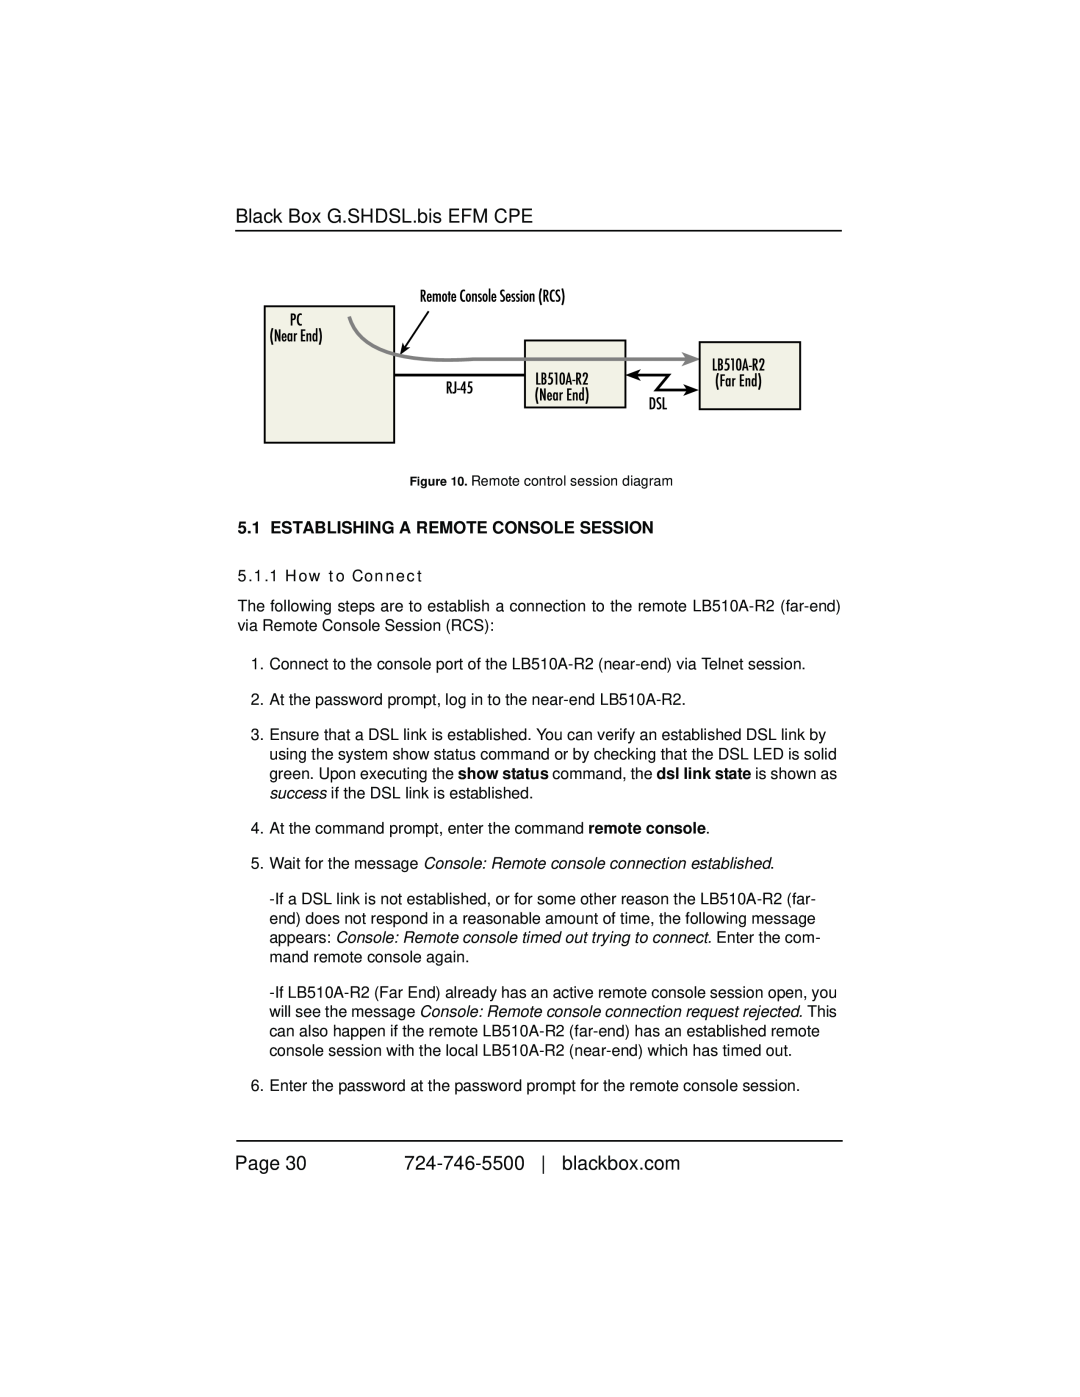 Black Box LB510A-R2 manual Establishing A Remote Console Session, How to Connect, Black Box G.SHDSL.bis EFM CPE, Page 